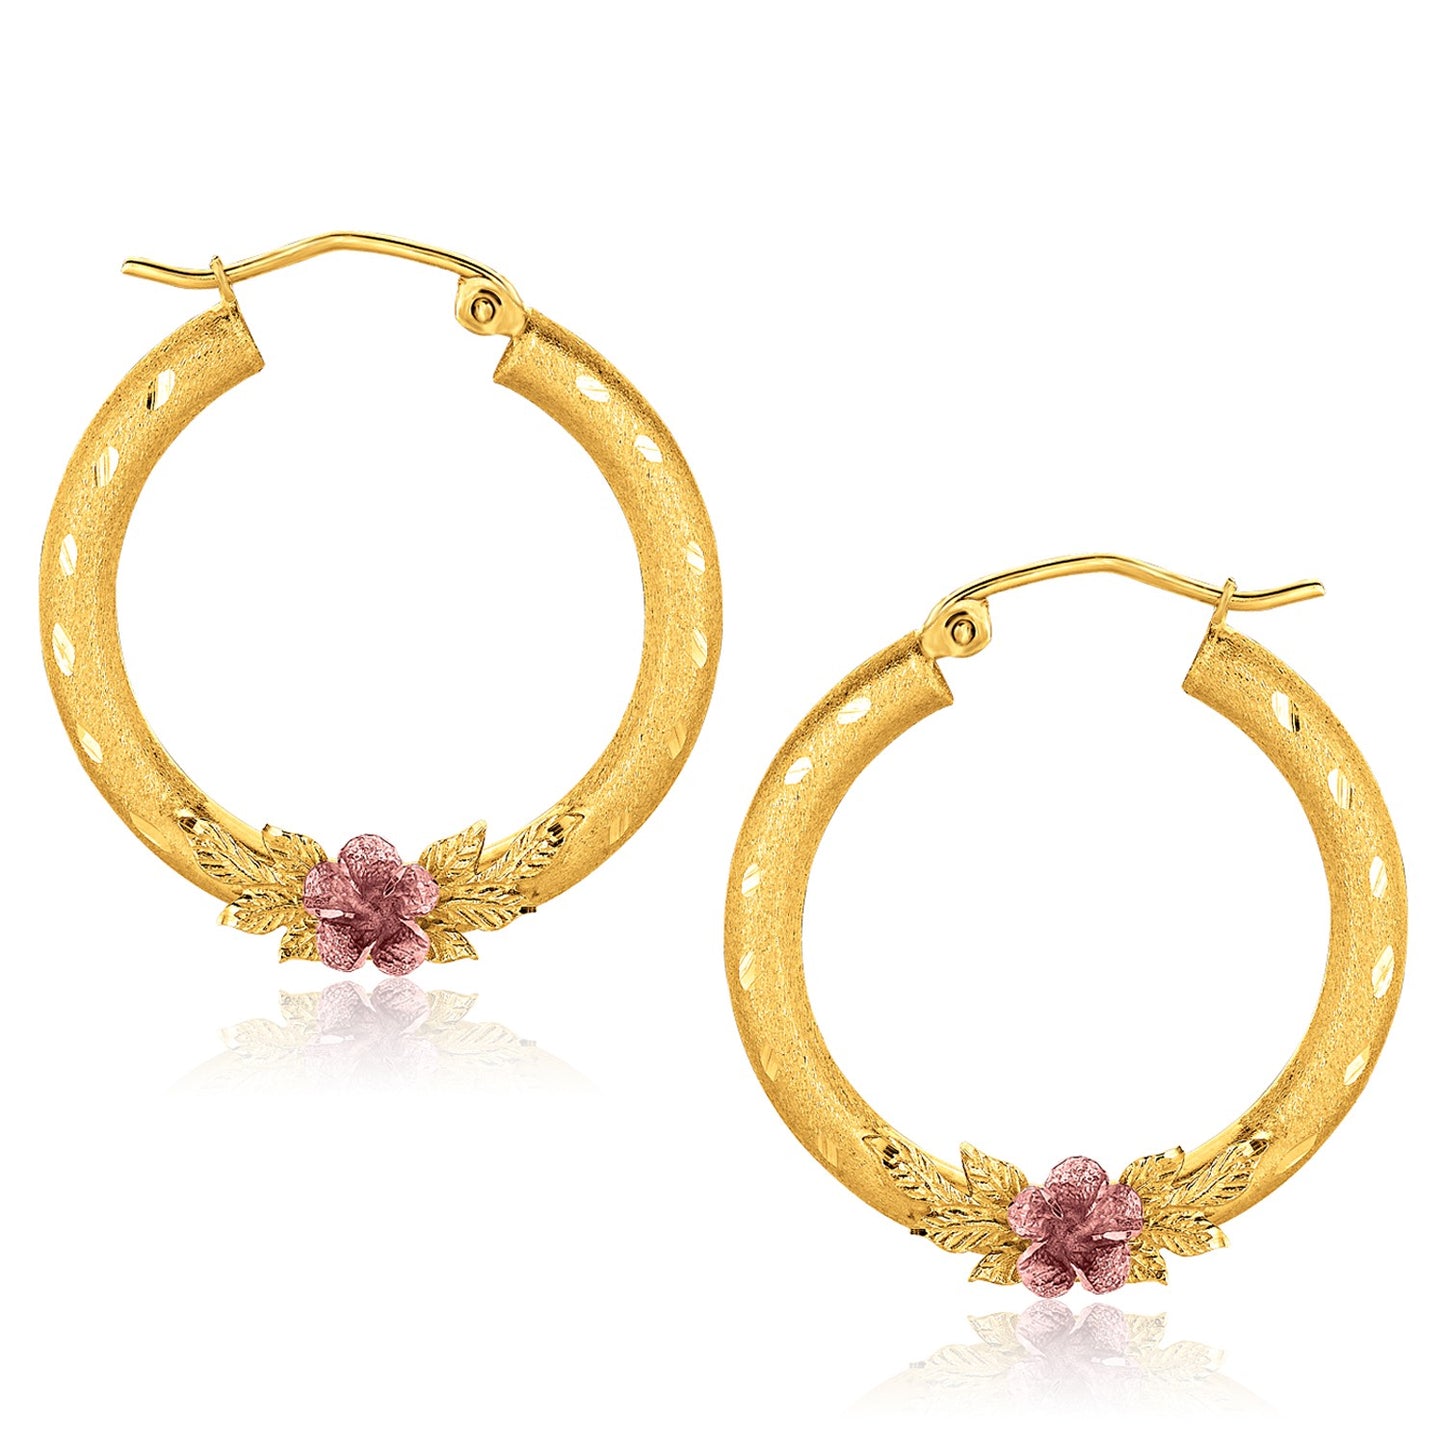 10K Two-Tone Gold Hoop Earrings with Flower Motif